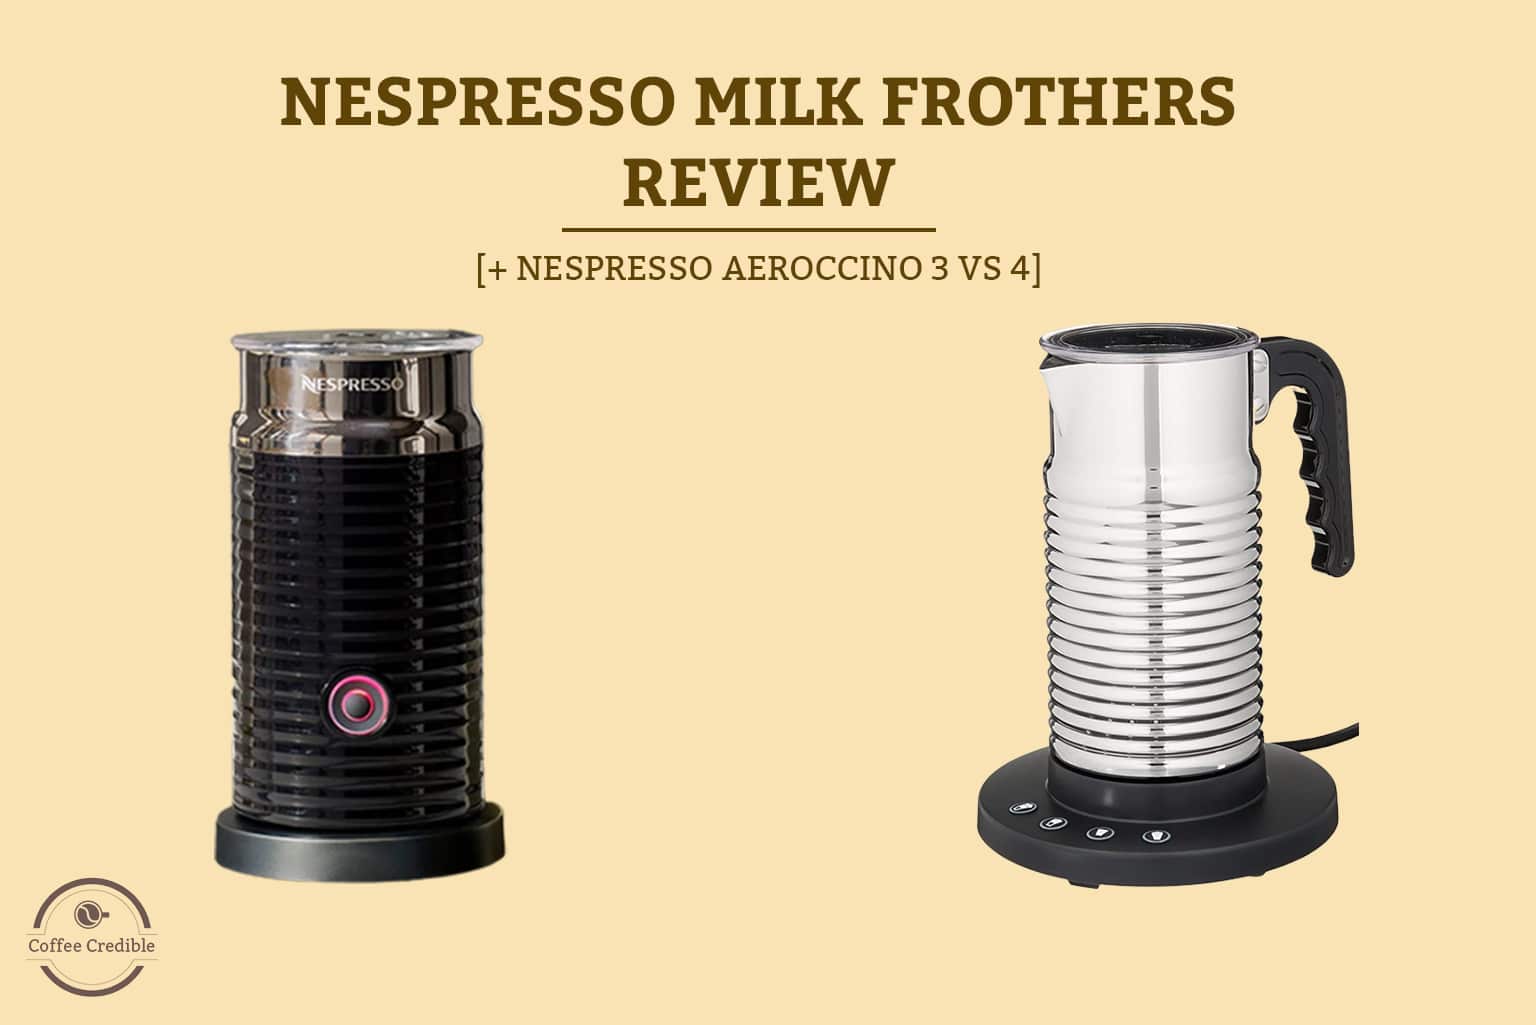 Nespresso Milk Frothers Review [+ Nespresso Aeroccino 3 Vs 4]